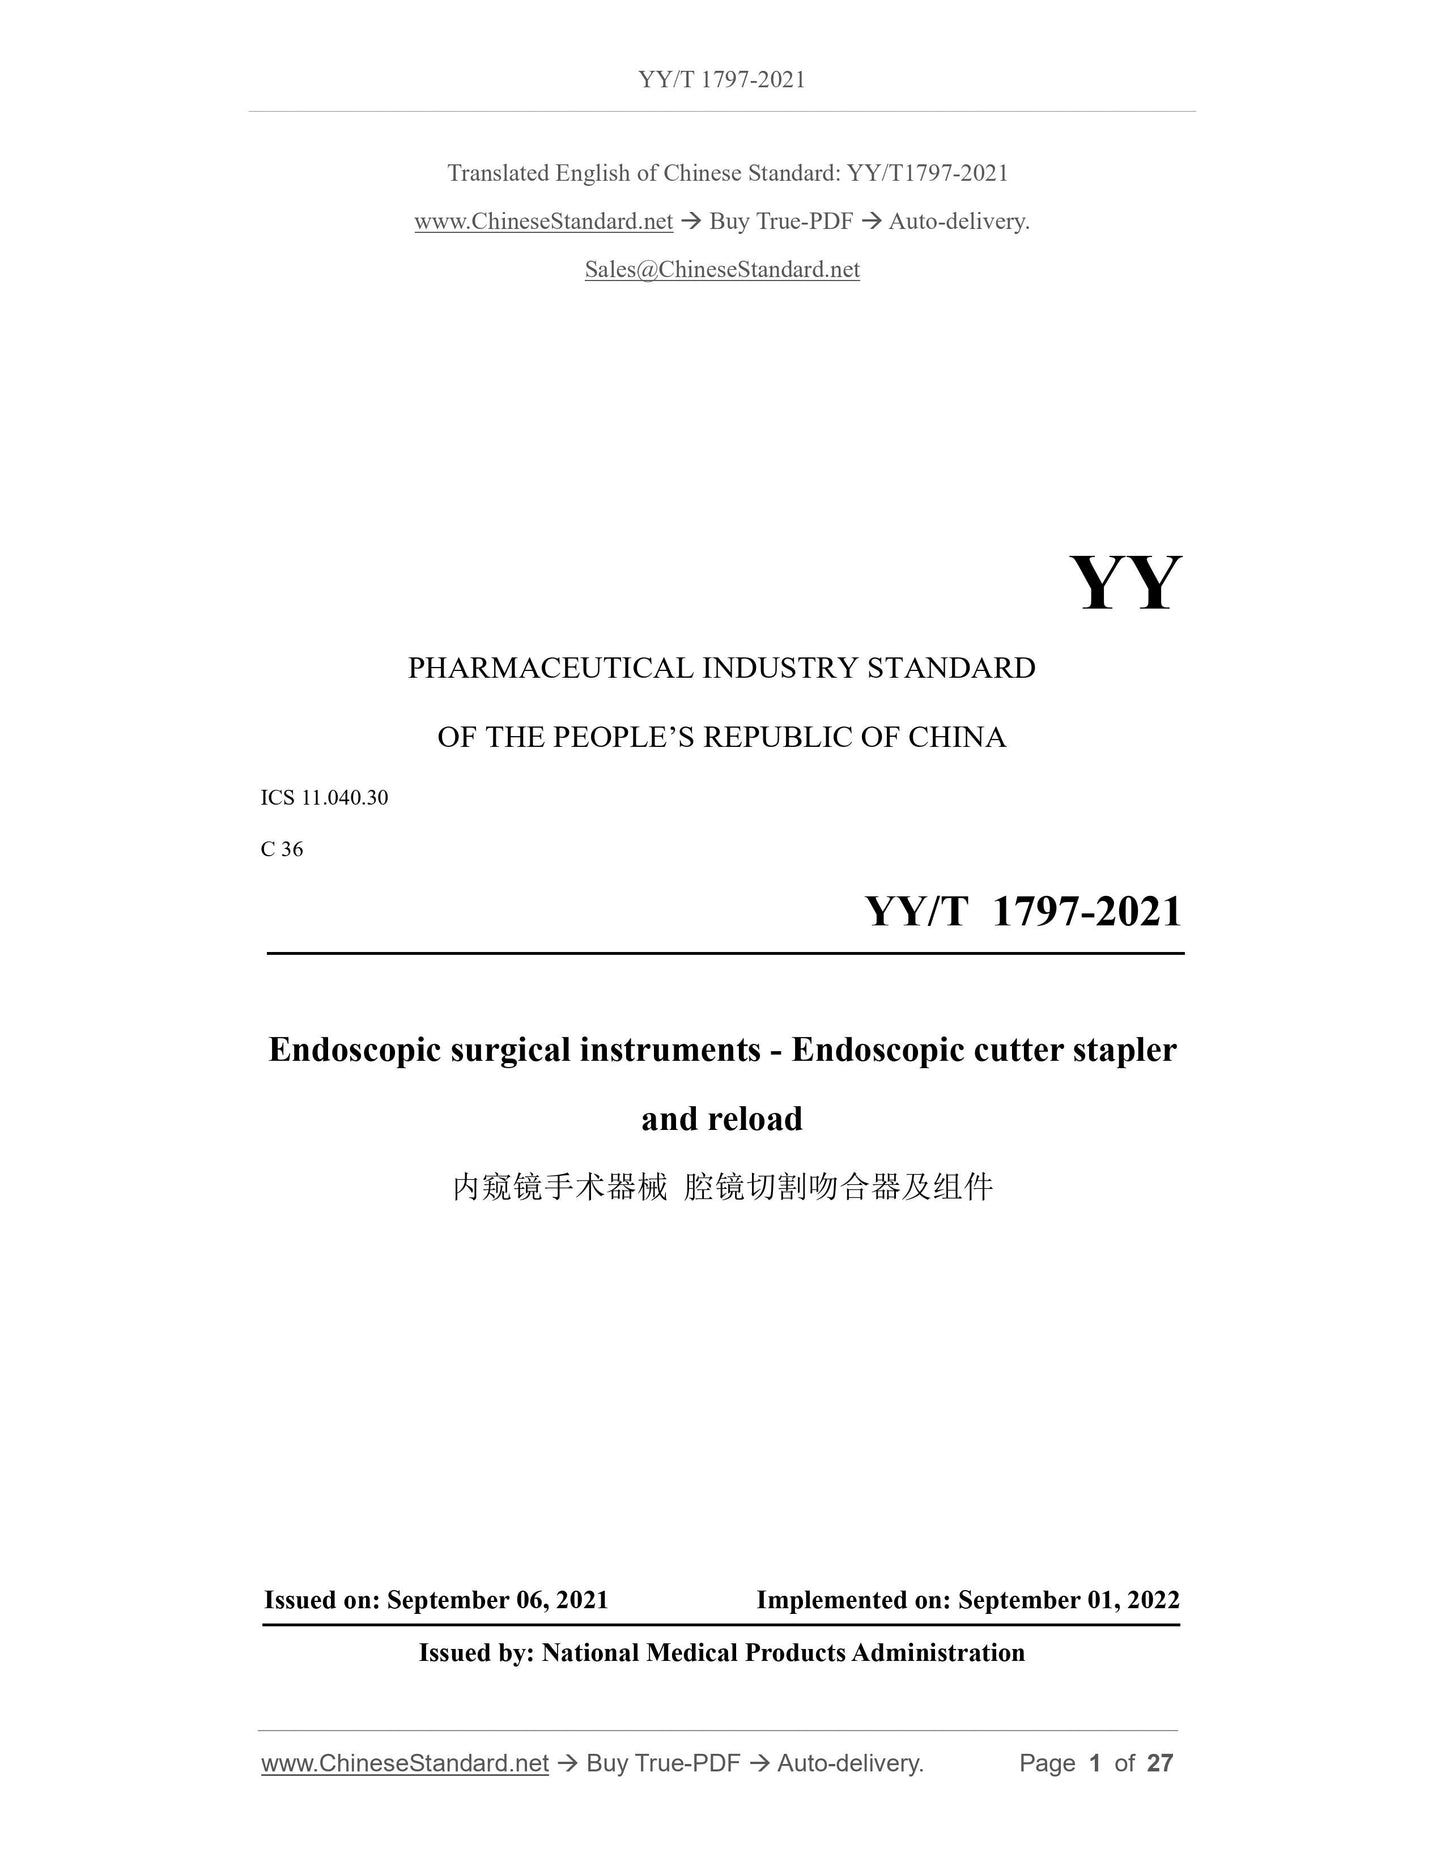 YY/T 1797-2021 Page 1